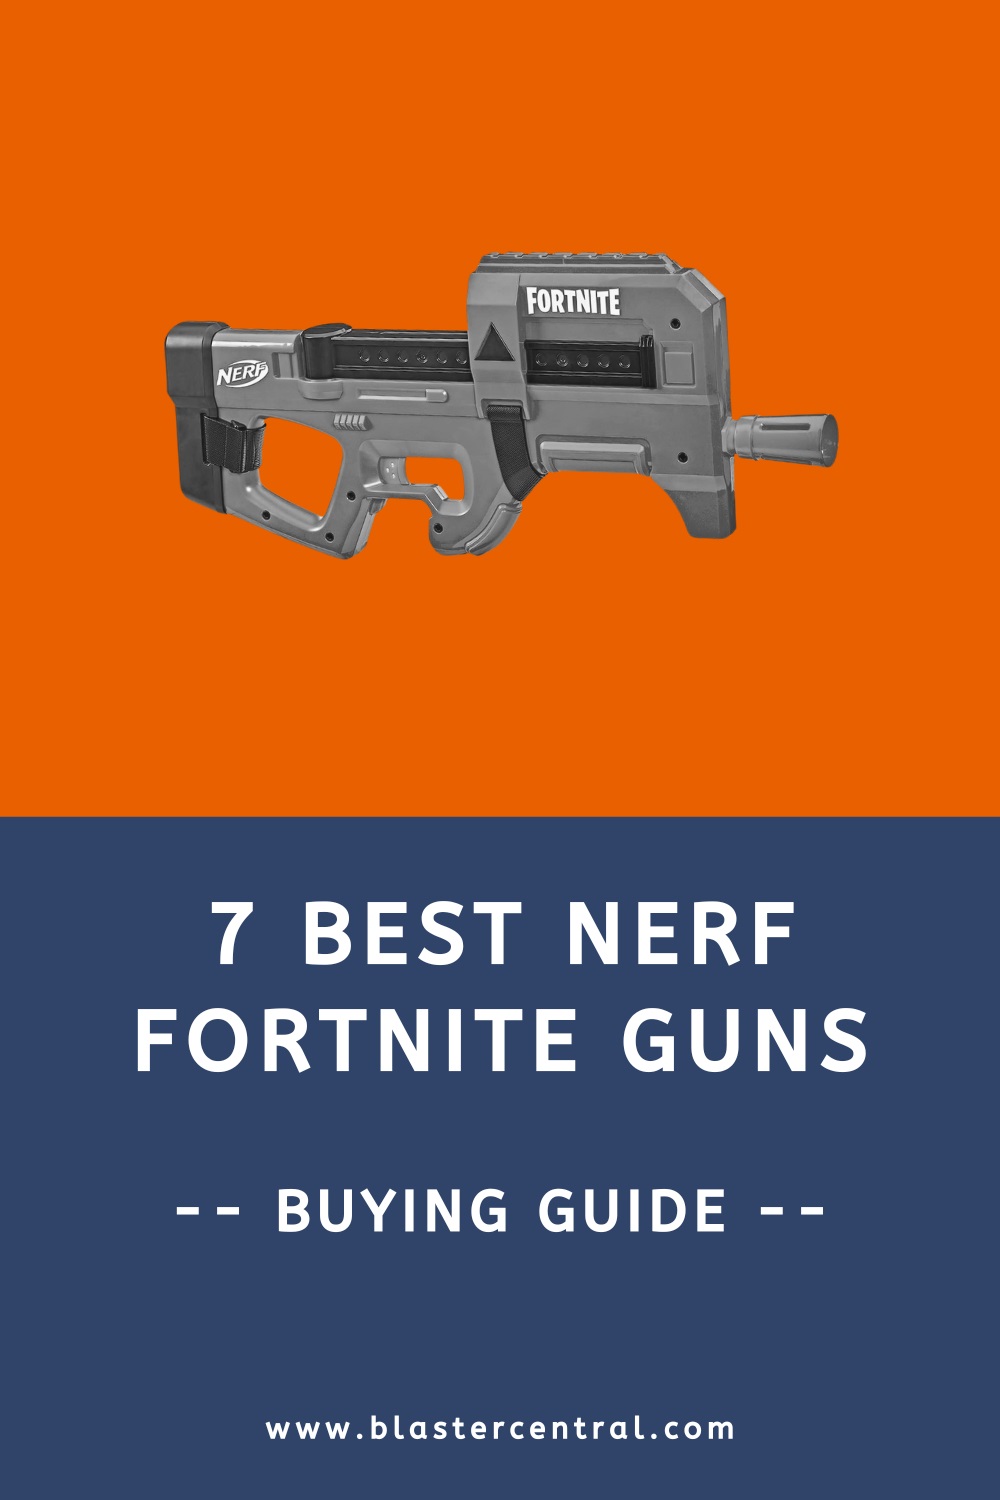 7 Best Nerf Fortnite blasters (buying guide)